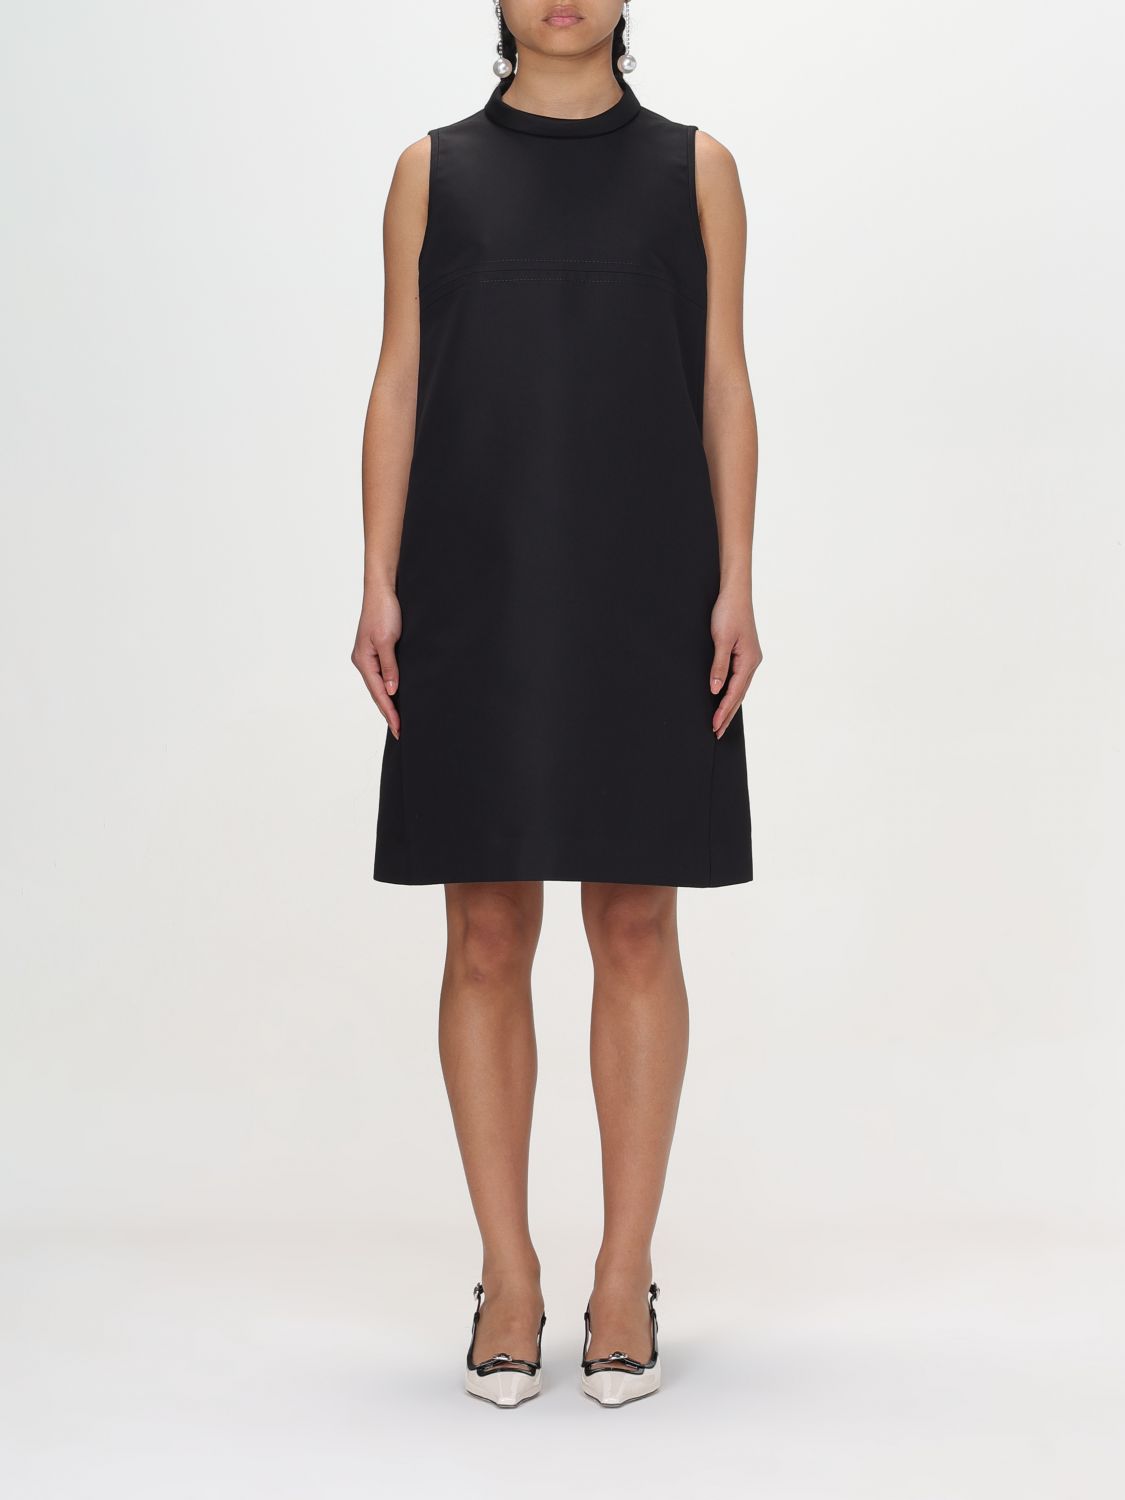 Shop N°21 Dress N° 21 Woman Color Black